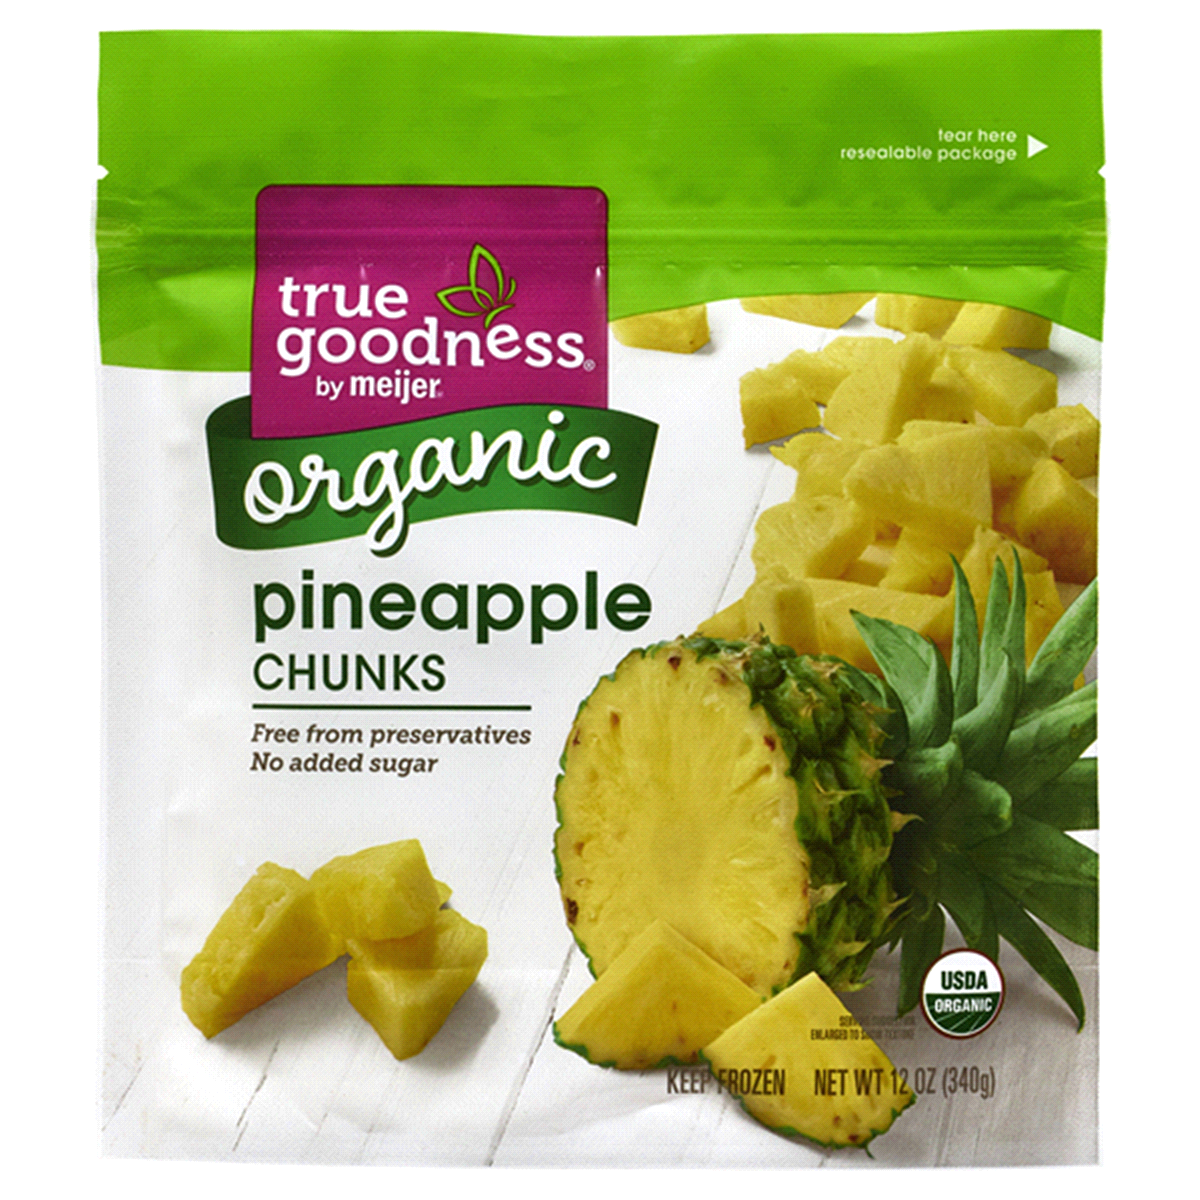 H-E-B Organics Frozen Pineapple Chunks